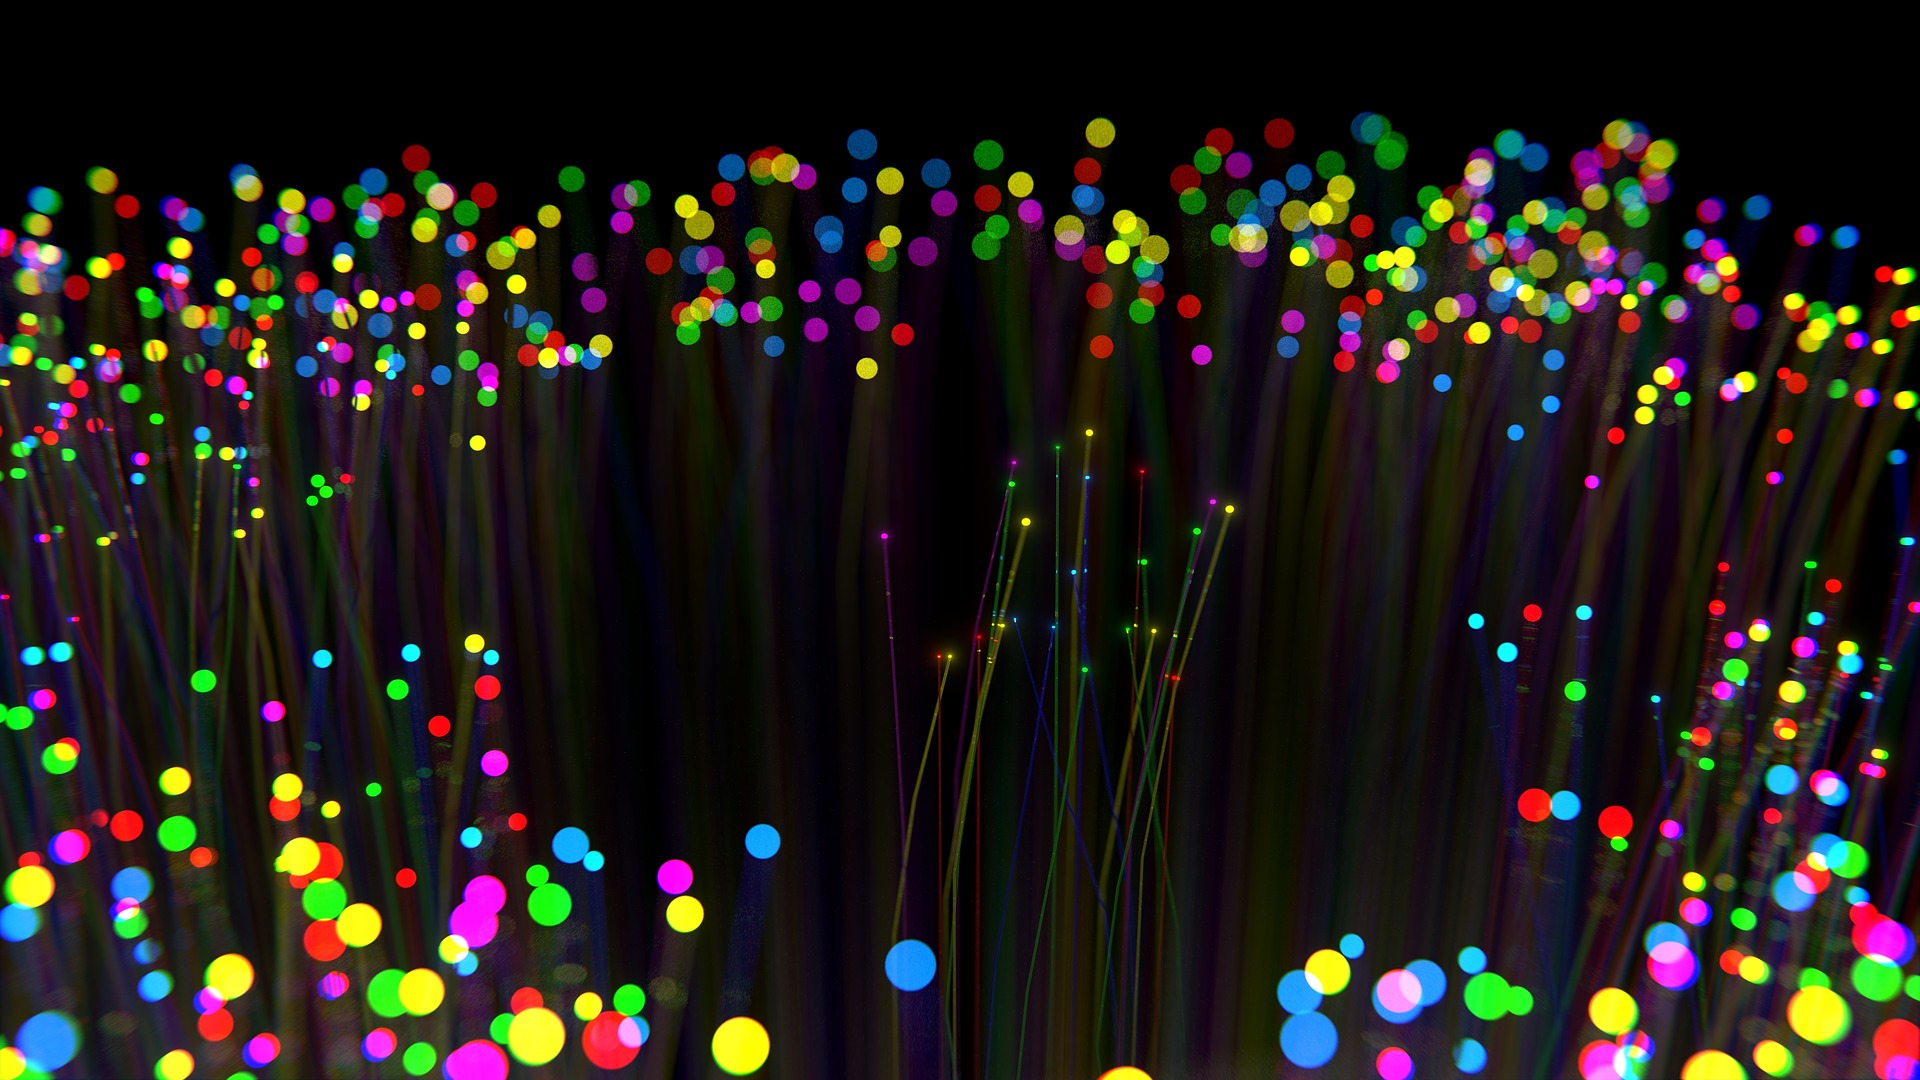 fiber-optic-charles-kao.jpg